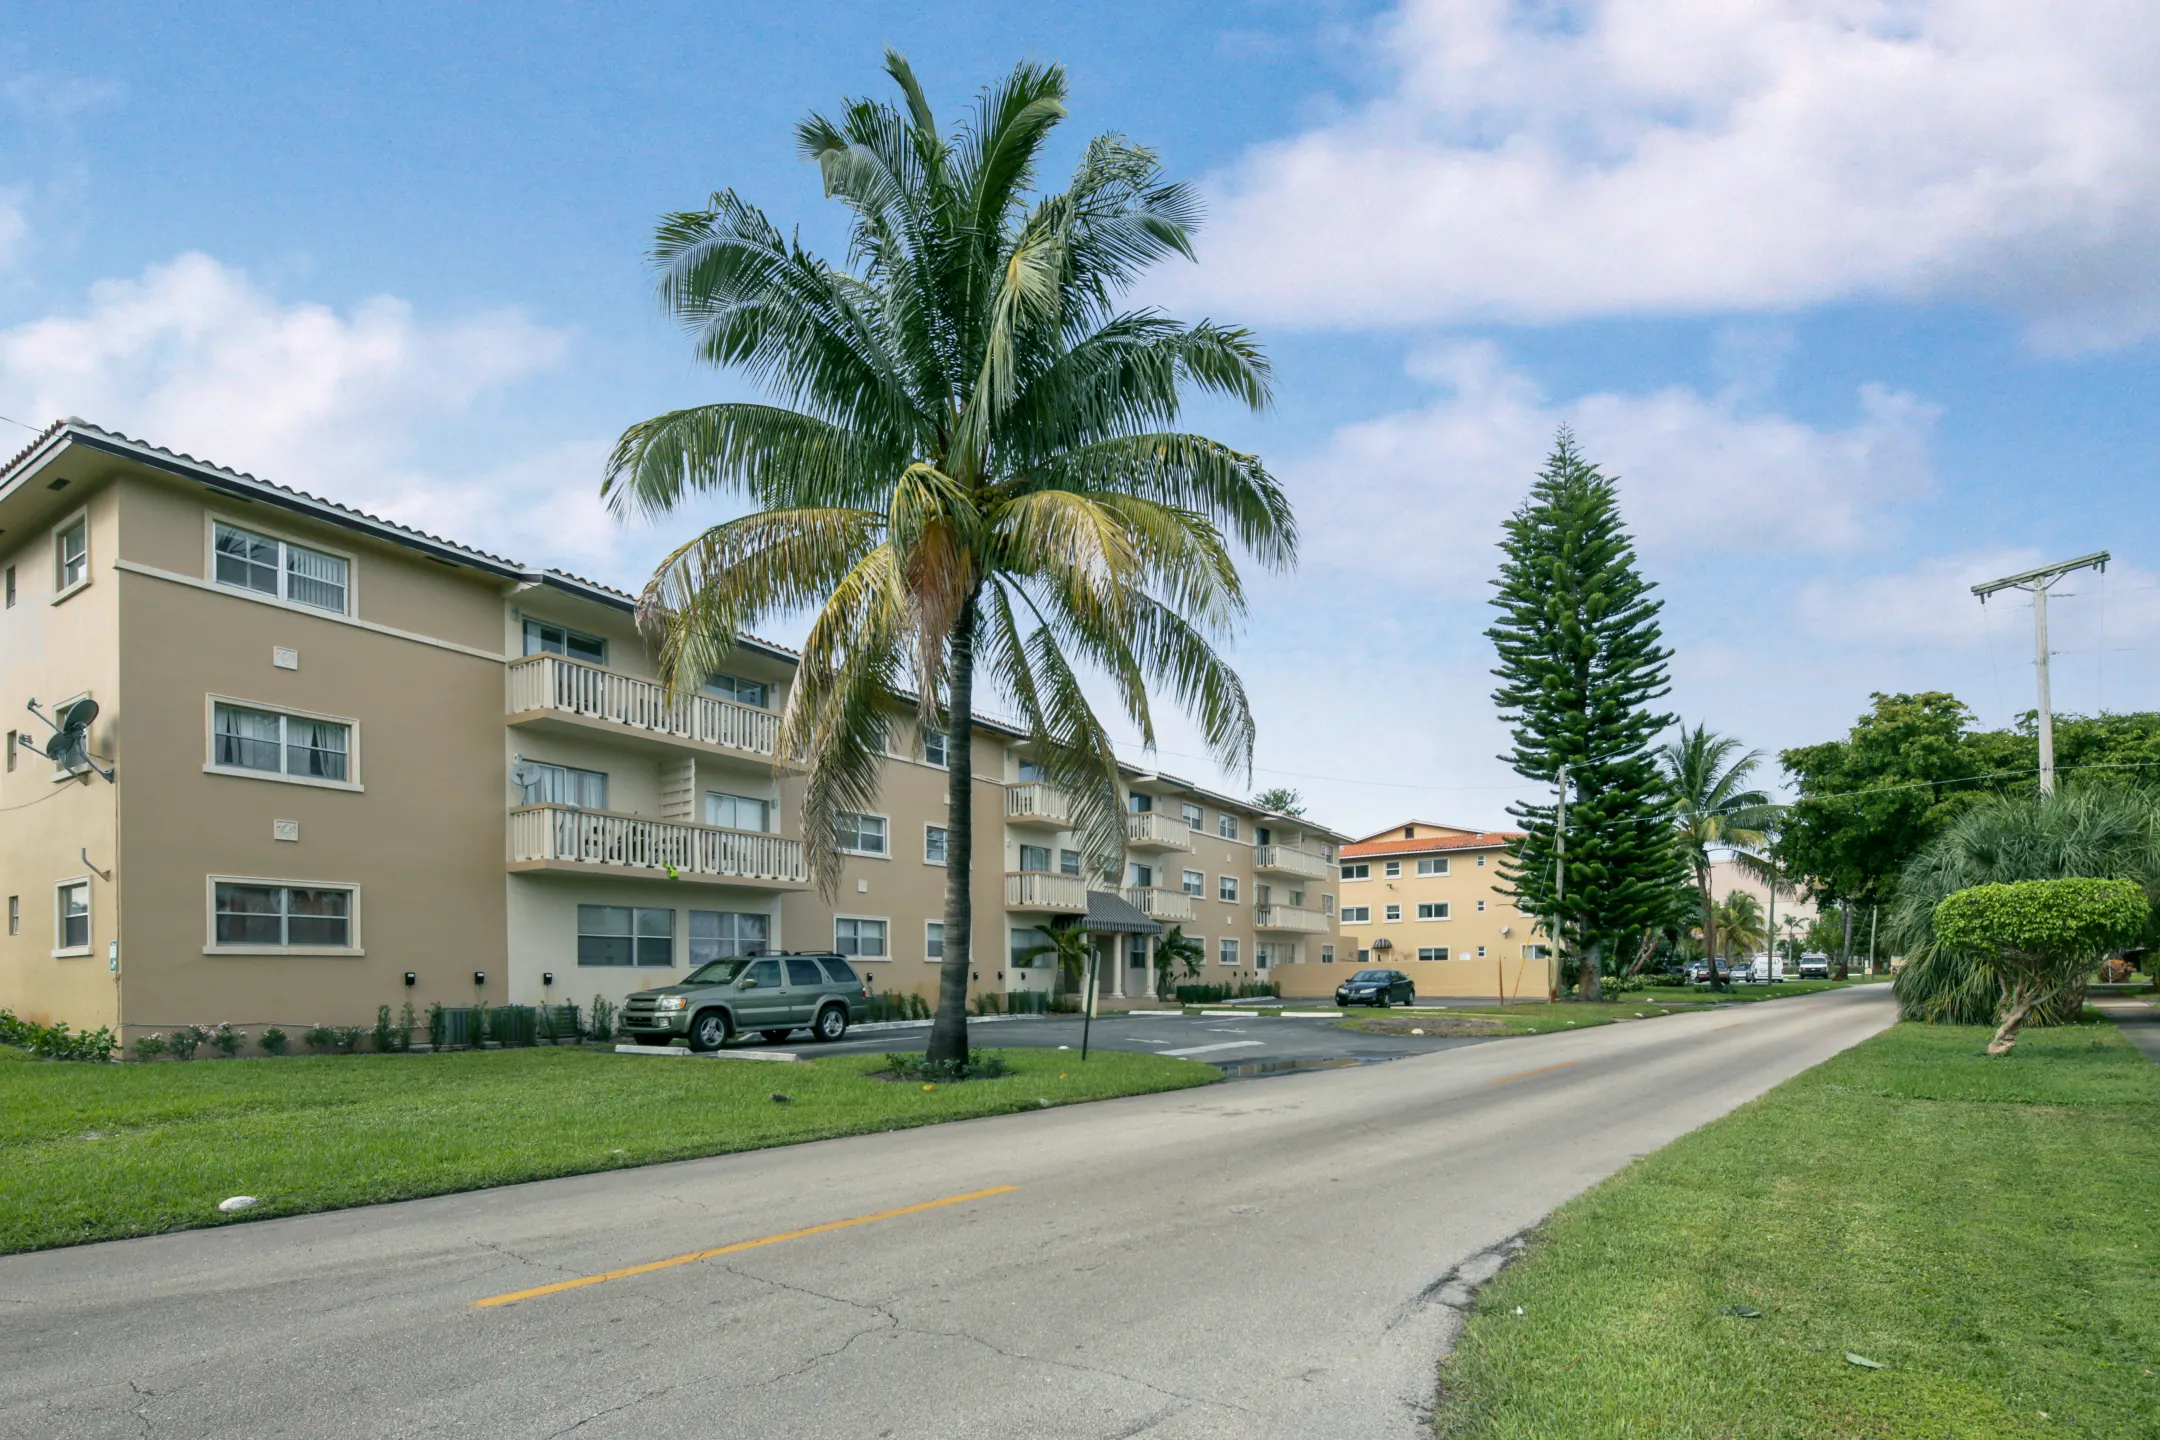 Building - The Apartment People - Deerfield Beach, FL